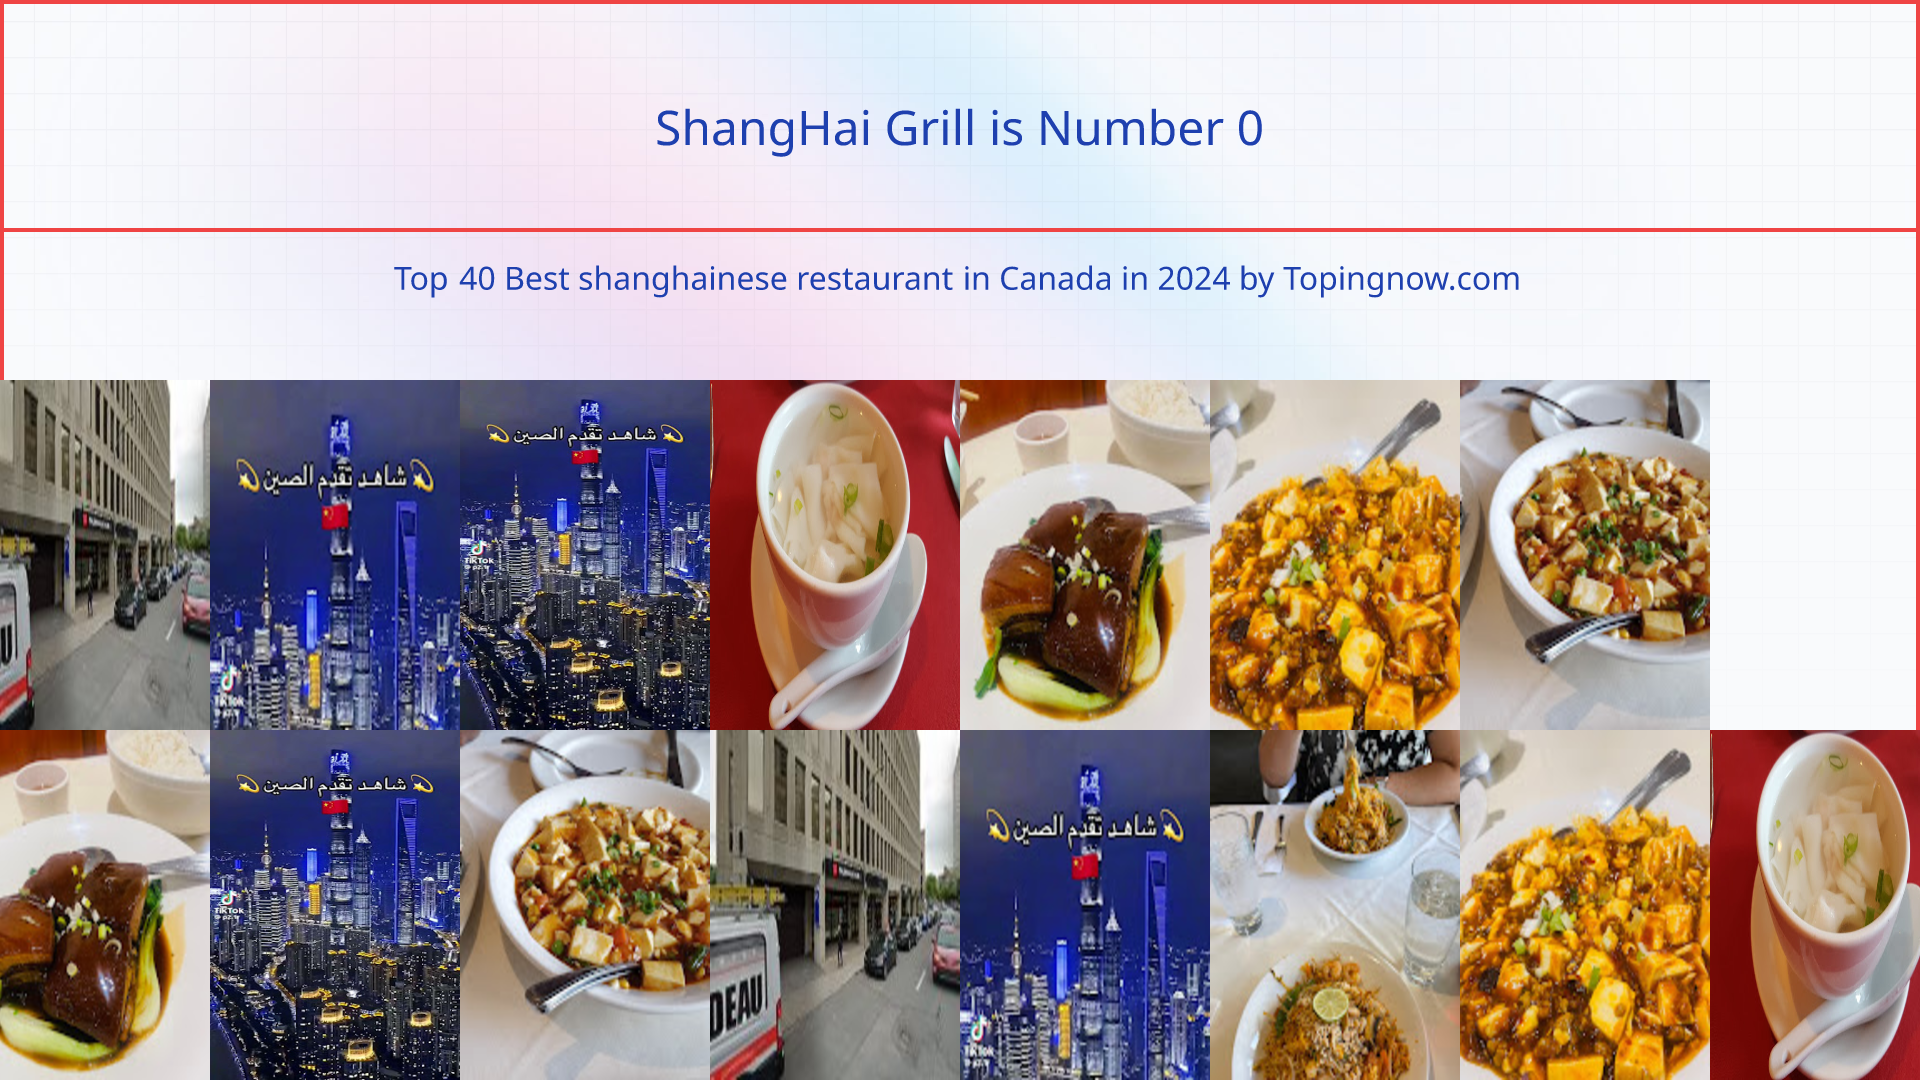 ShangHai Grill: Top 40 Best shanghainese restaurant in Canada in 2024